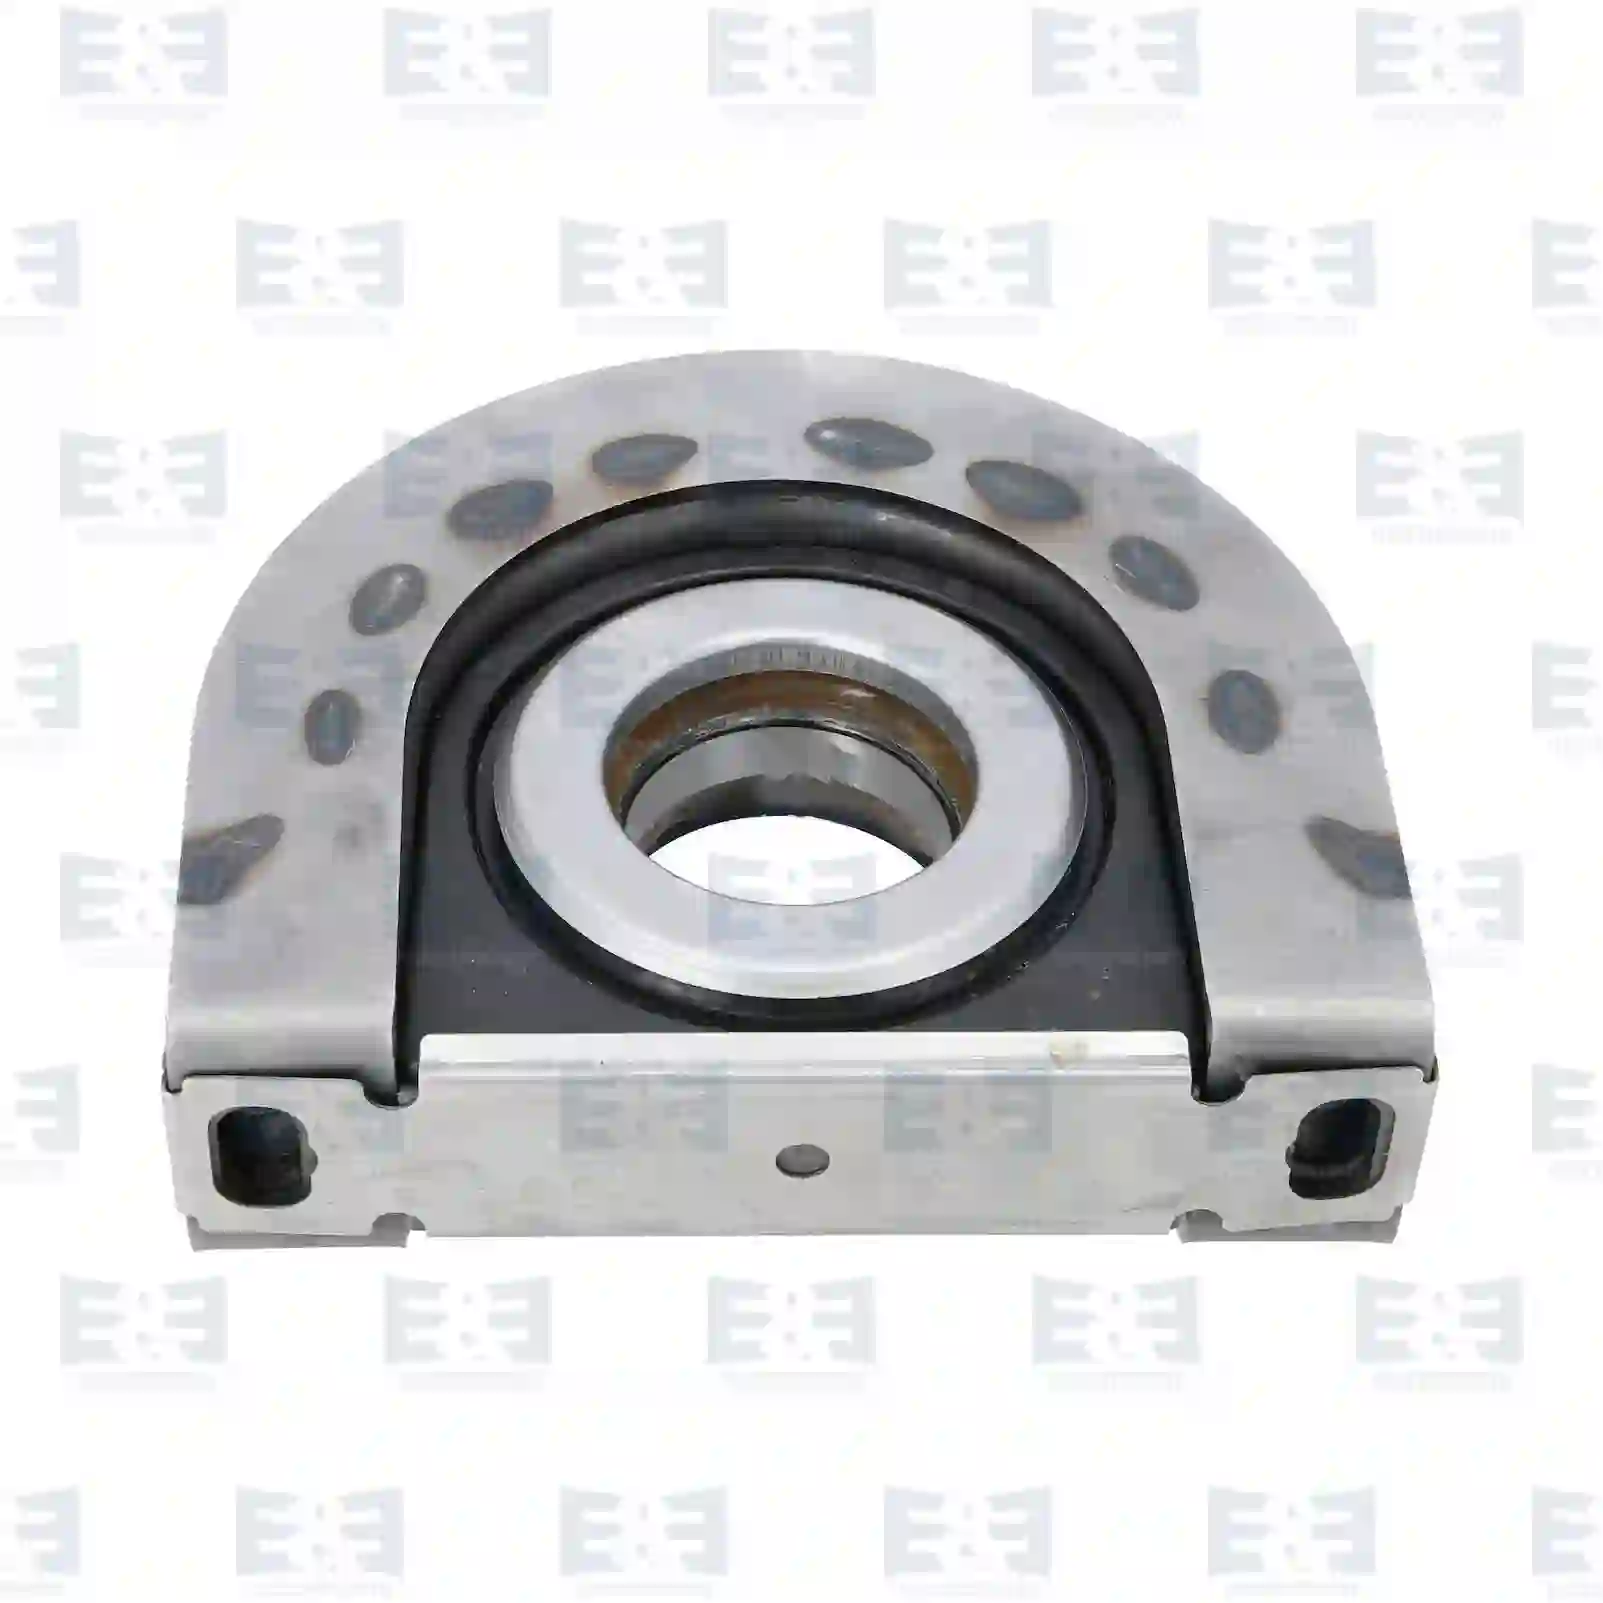  Center bearing, reinforced version || E&E Truck Spare Parts | Truck Spare Parts, Auotomotive Spare Parts